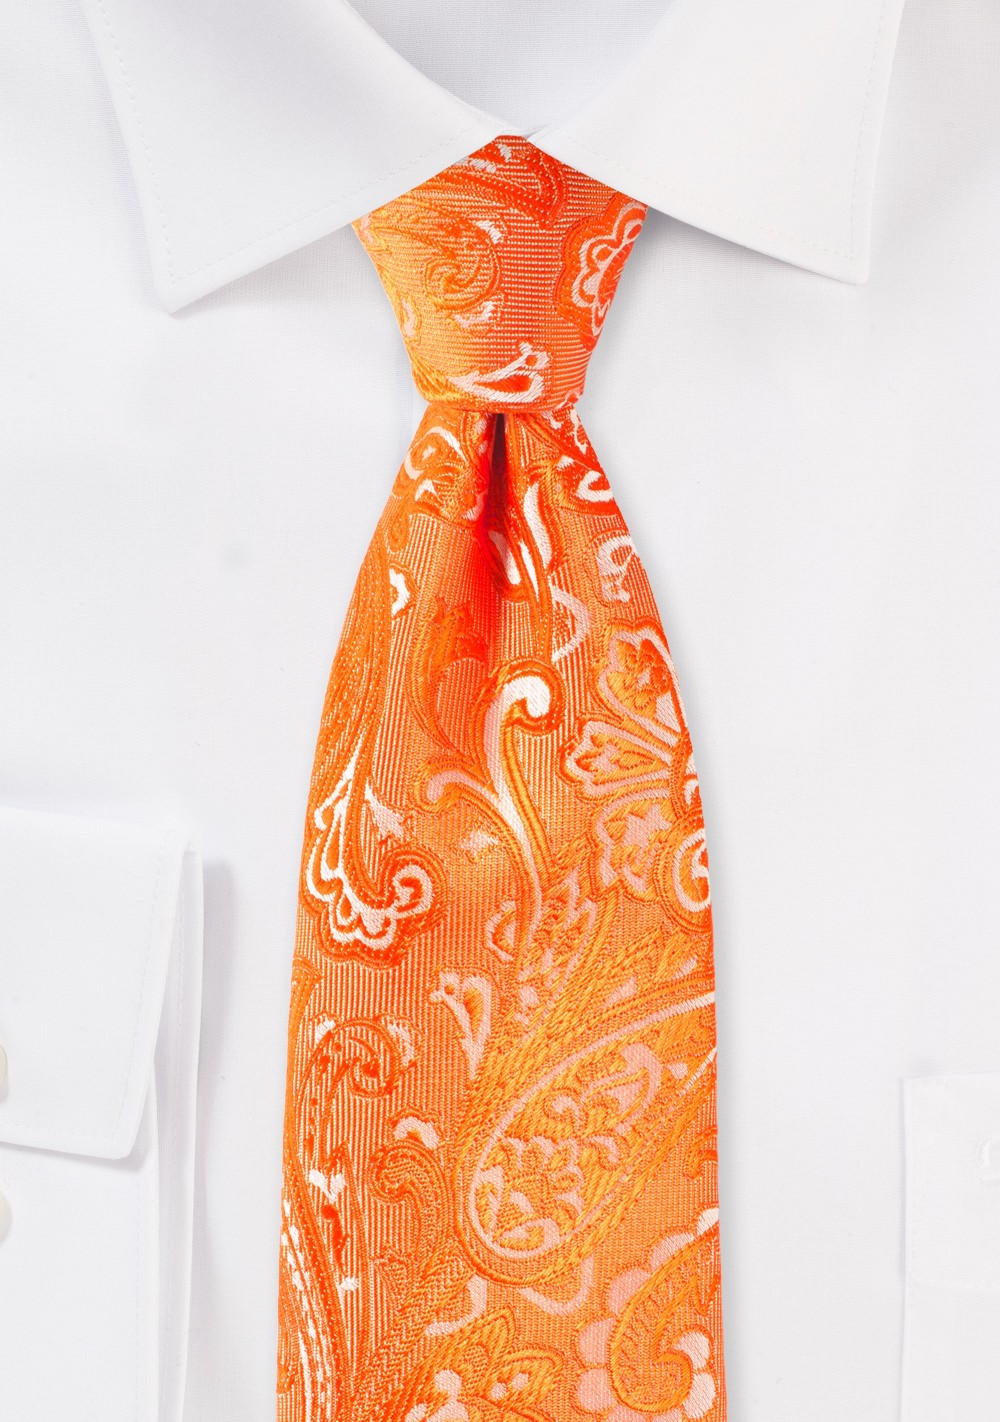 Mandarin Paisley Tie